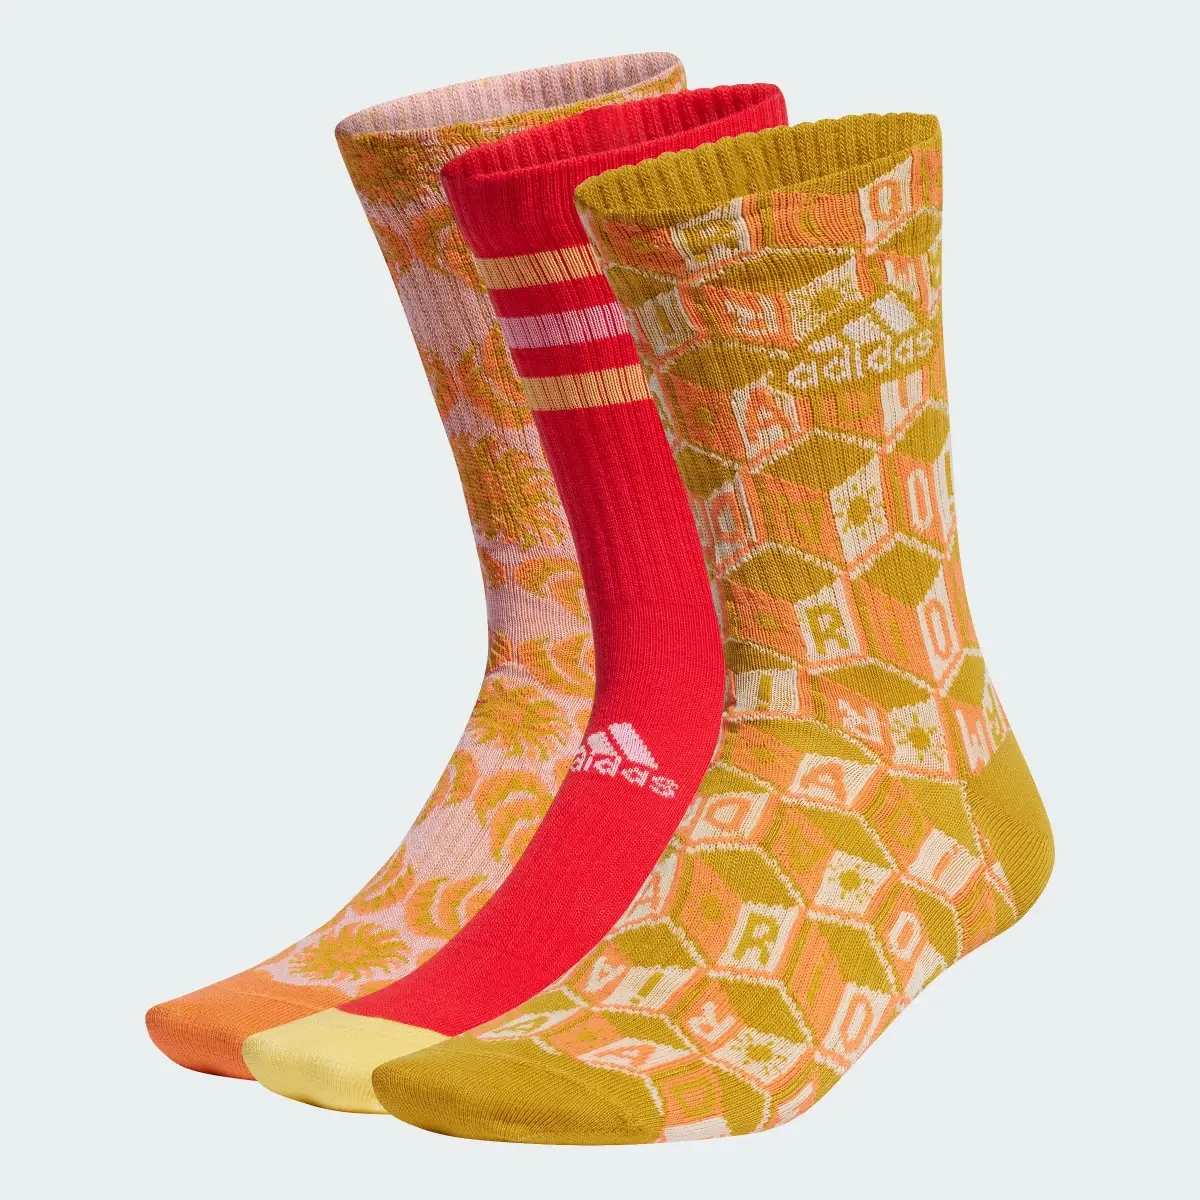 Adidas FARM Rio Bilekli Çorap - 3 Çift. 2